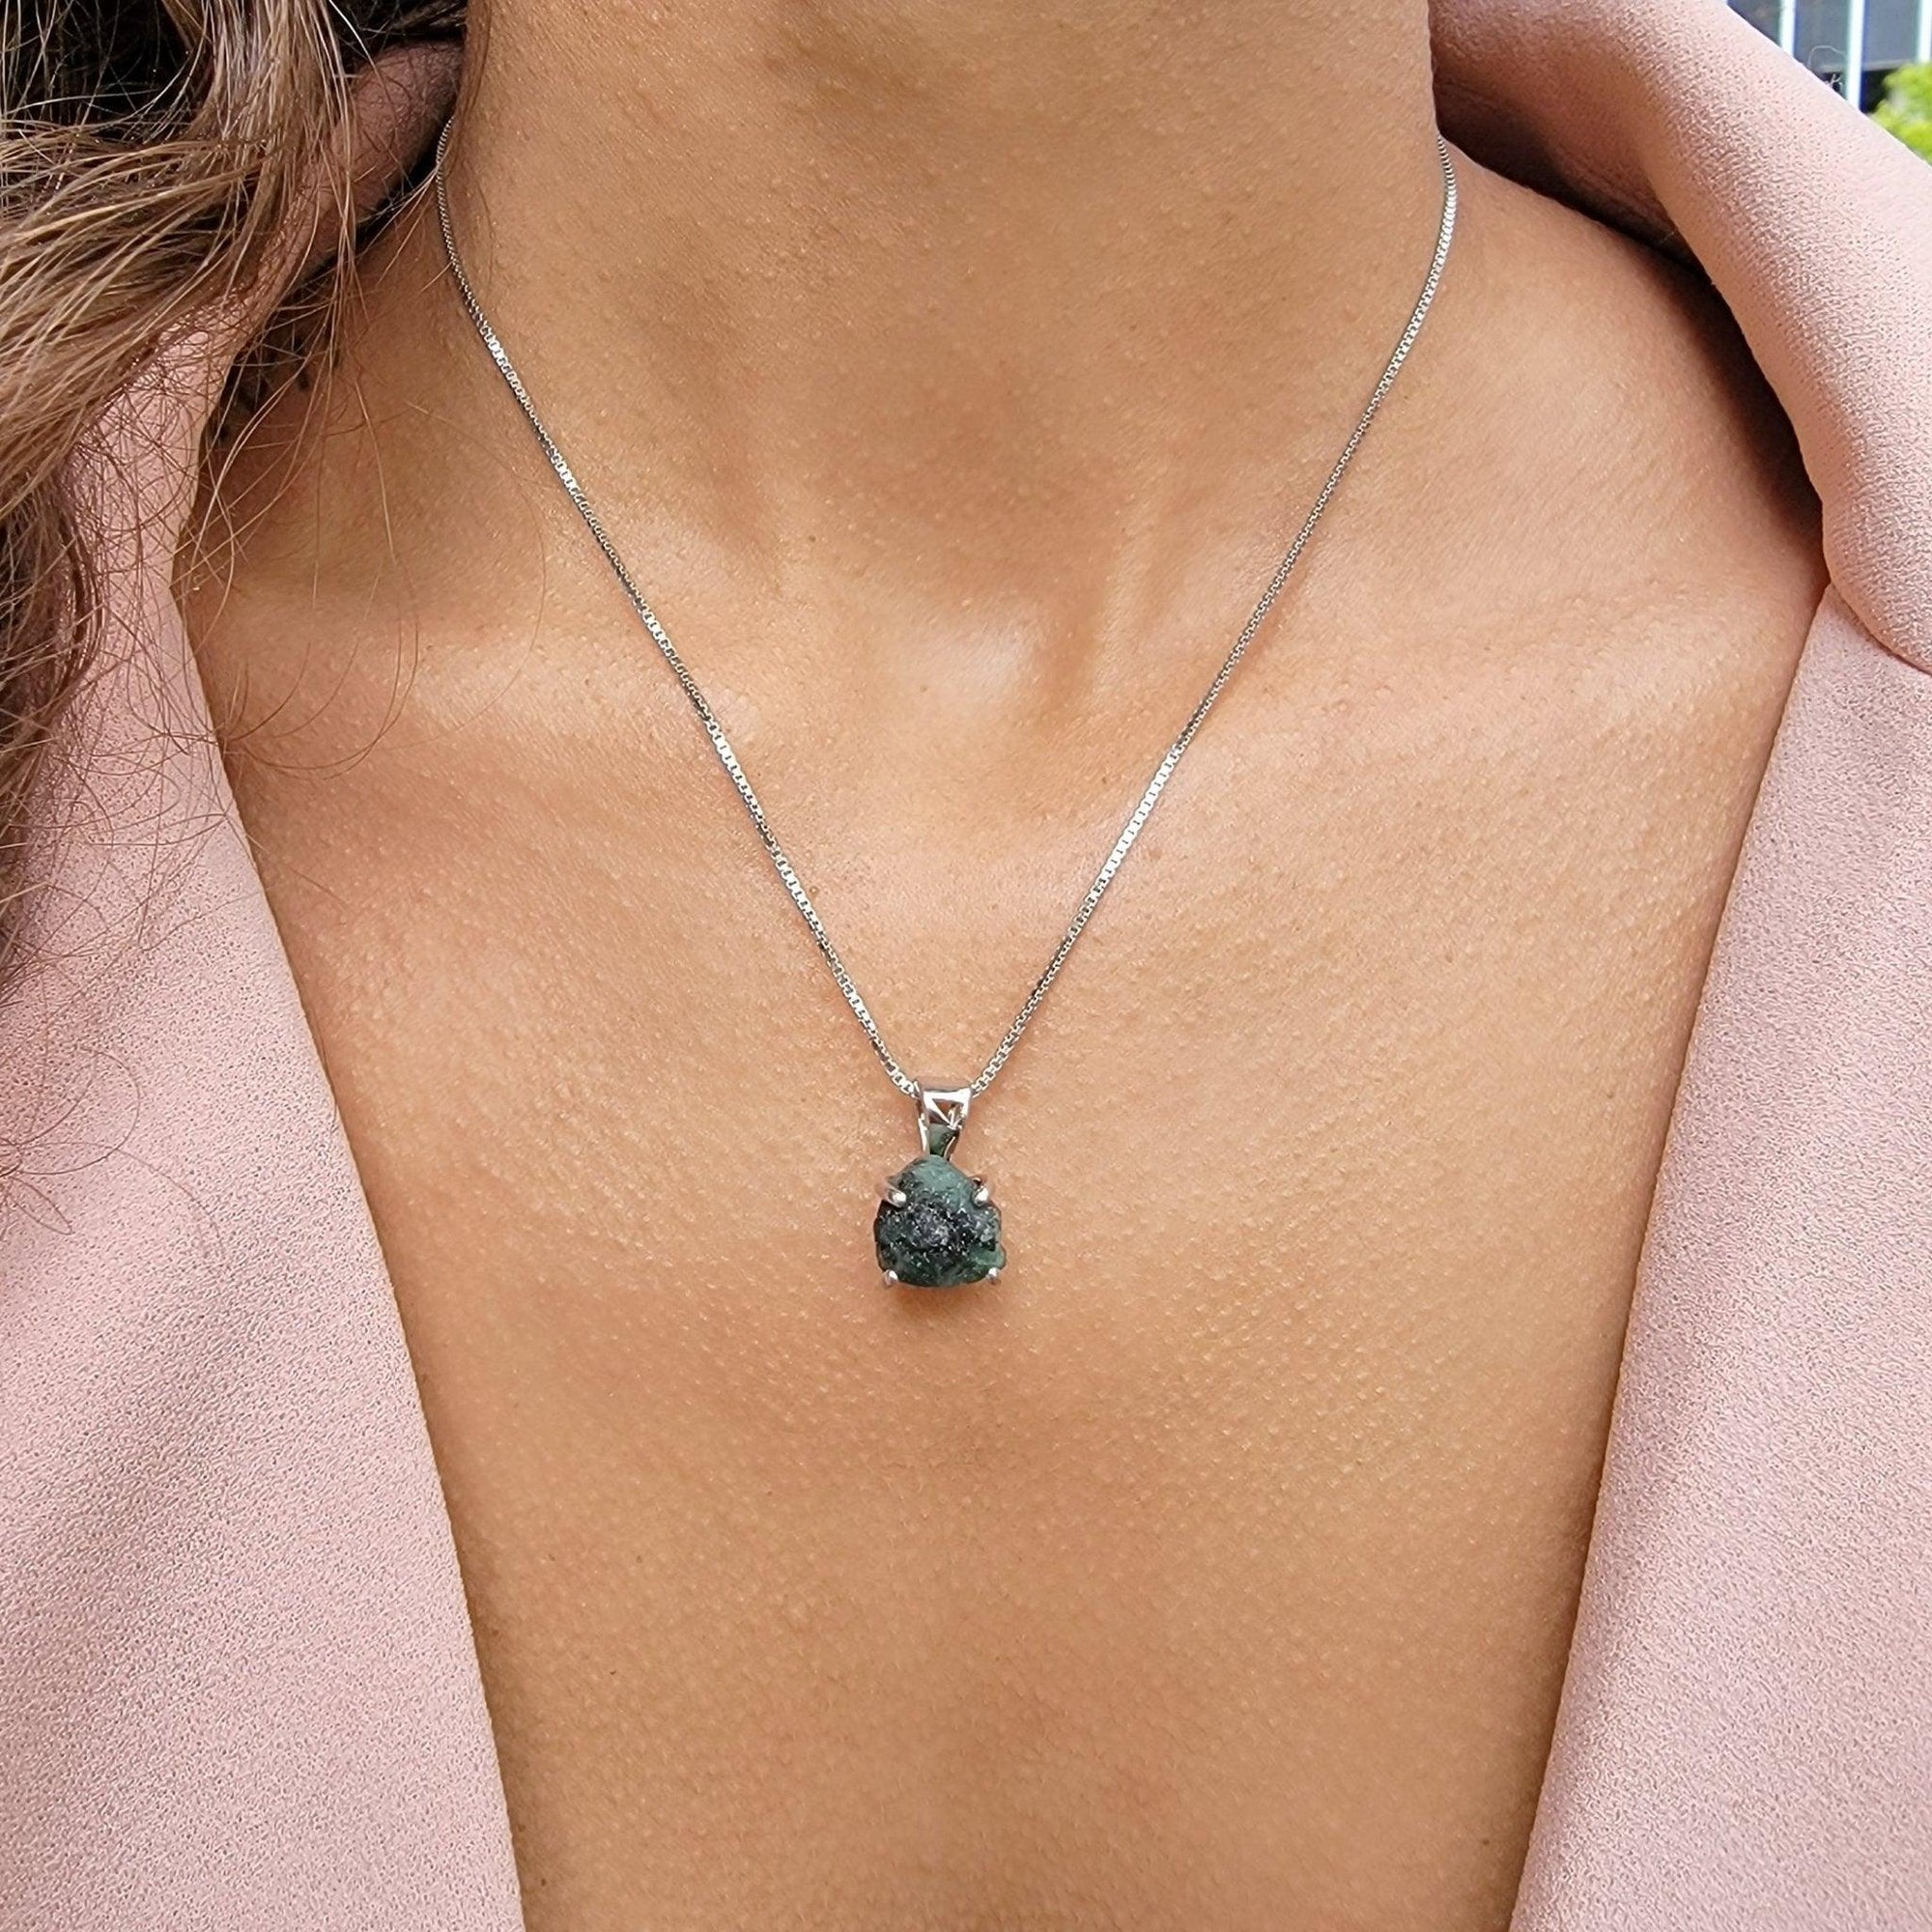 Real Raw Emerald Pendant Necklace - Uniquelan Jewelry